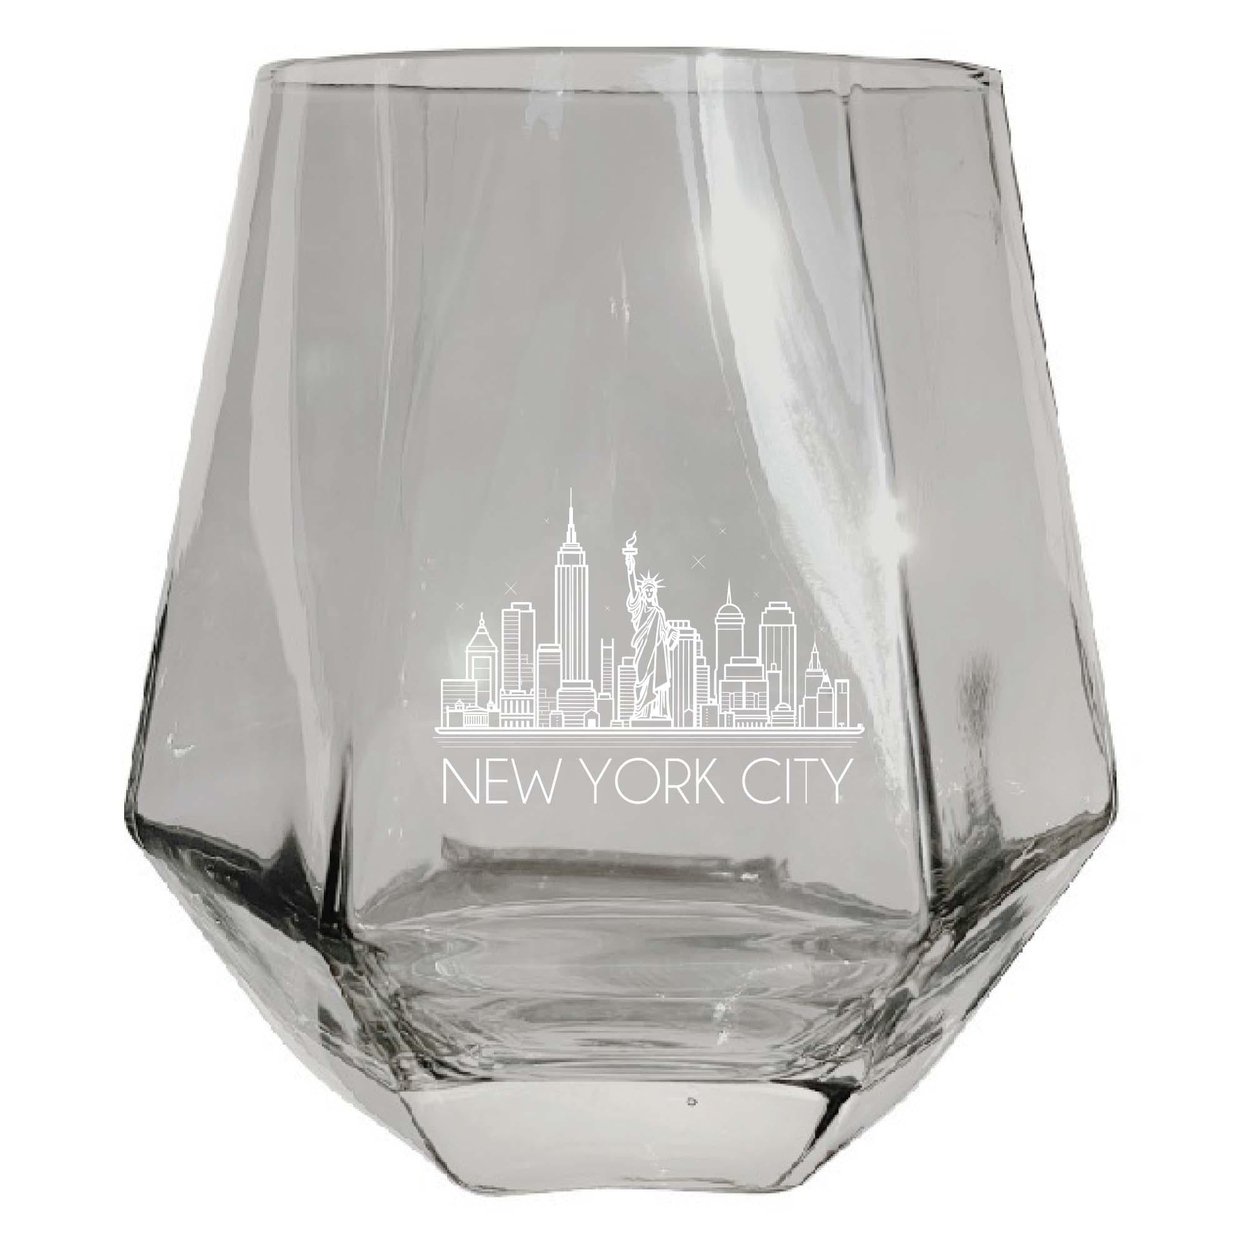 New York City Souvenir Wine Glass EngravedDiamond 15 Oz - Iridescent,,4-Pack